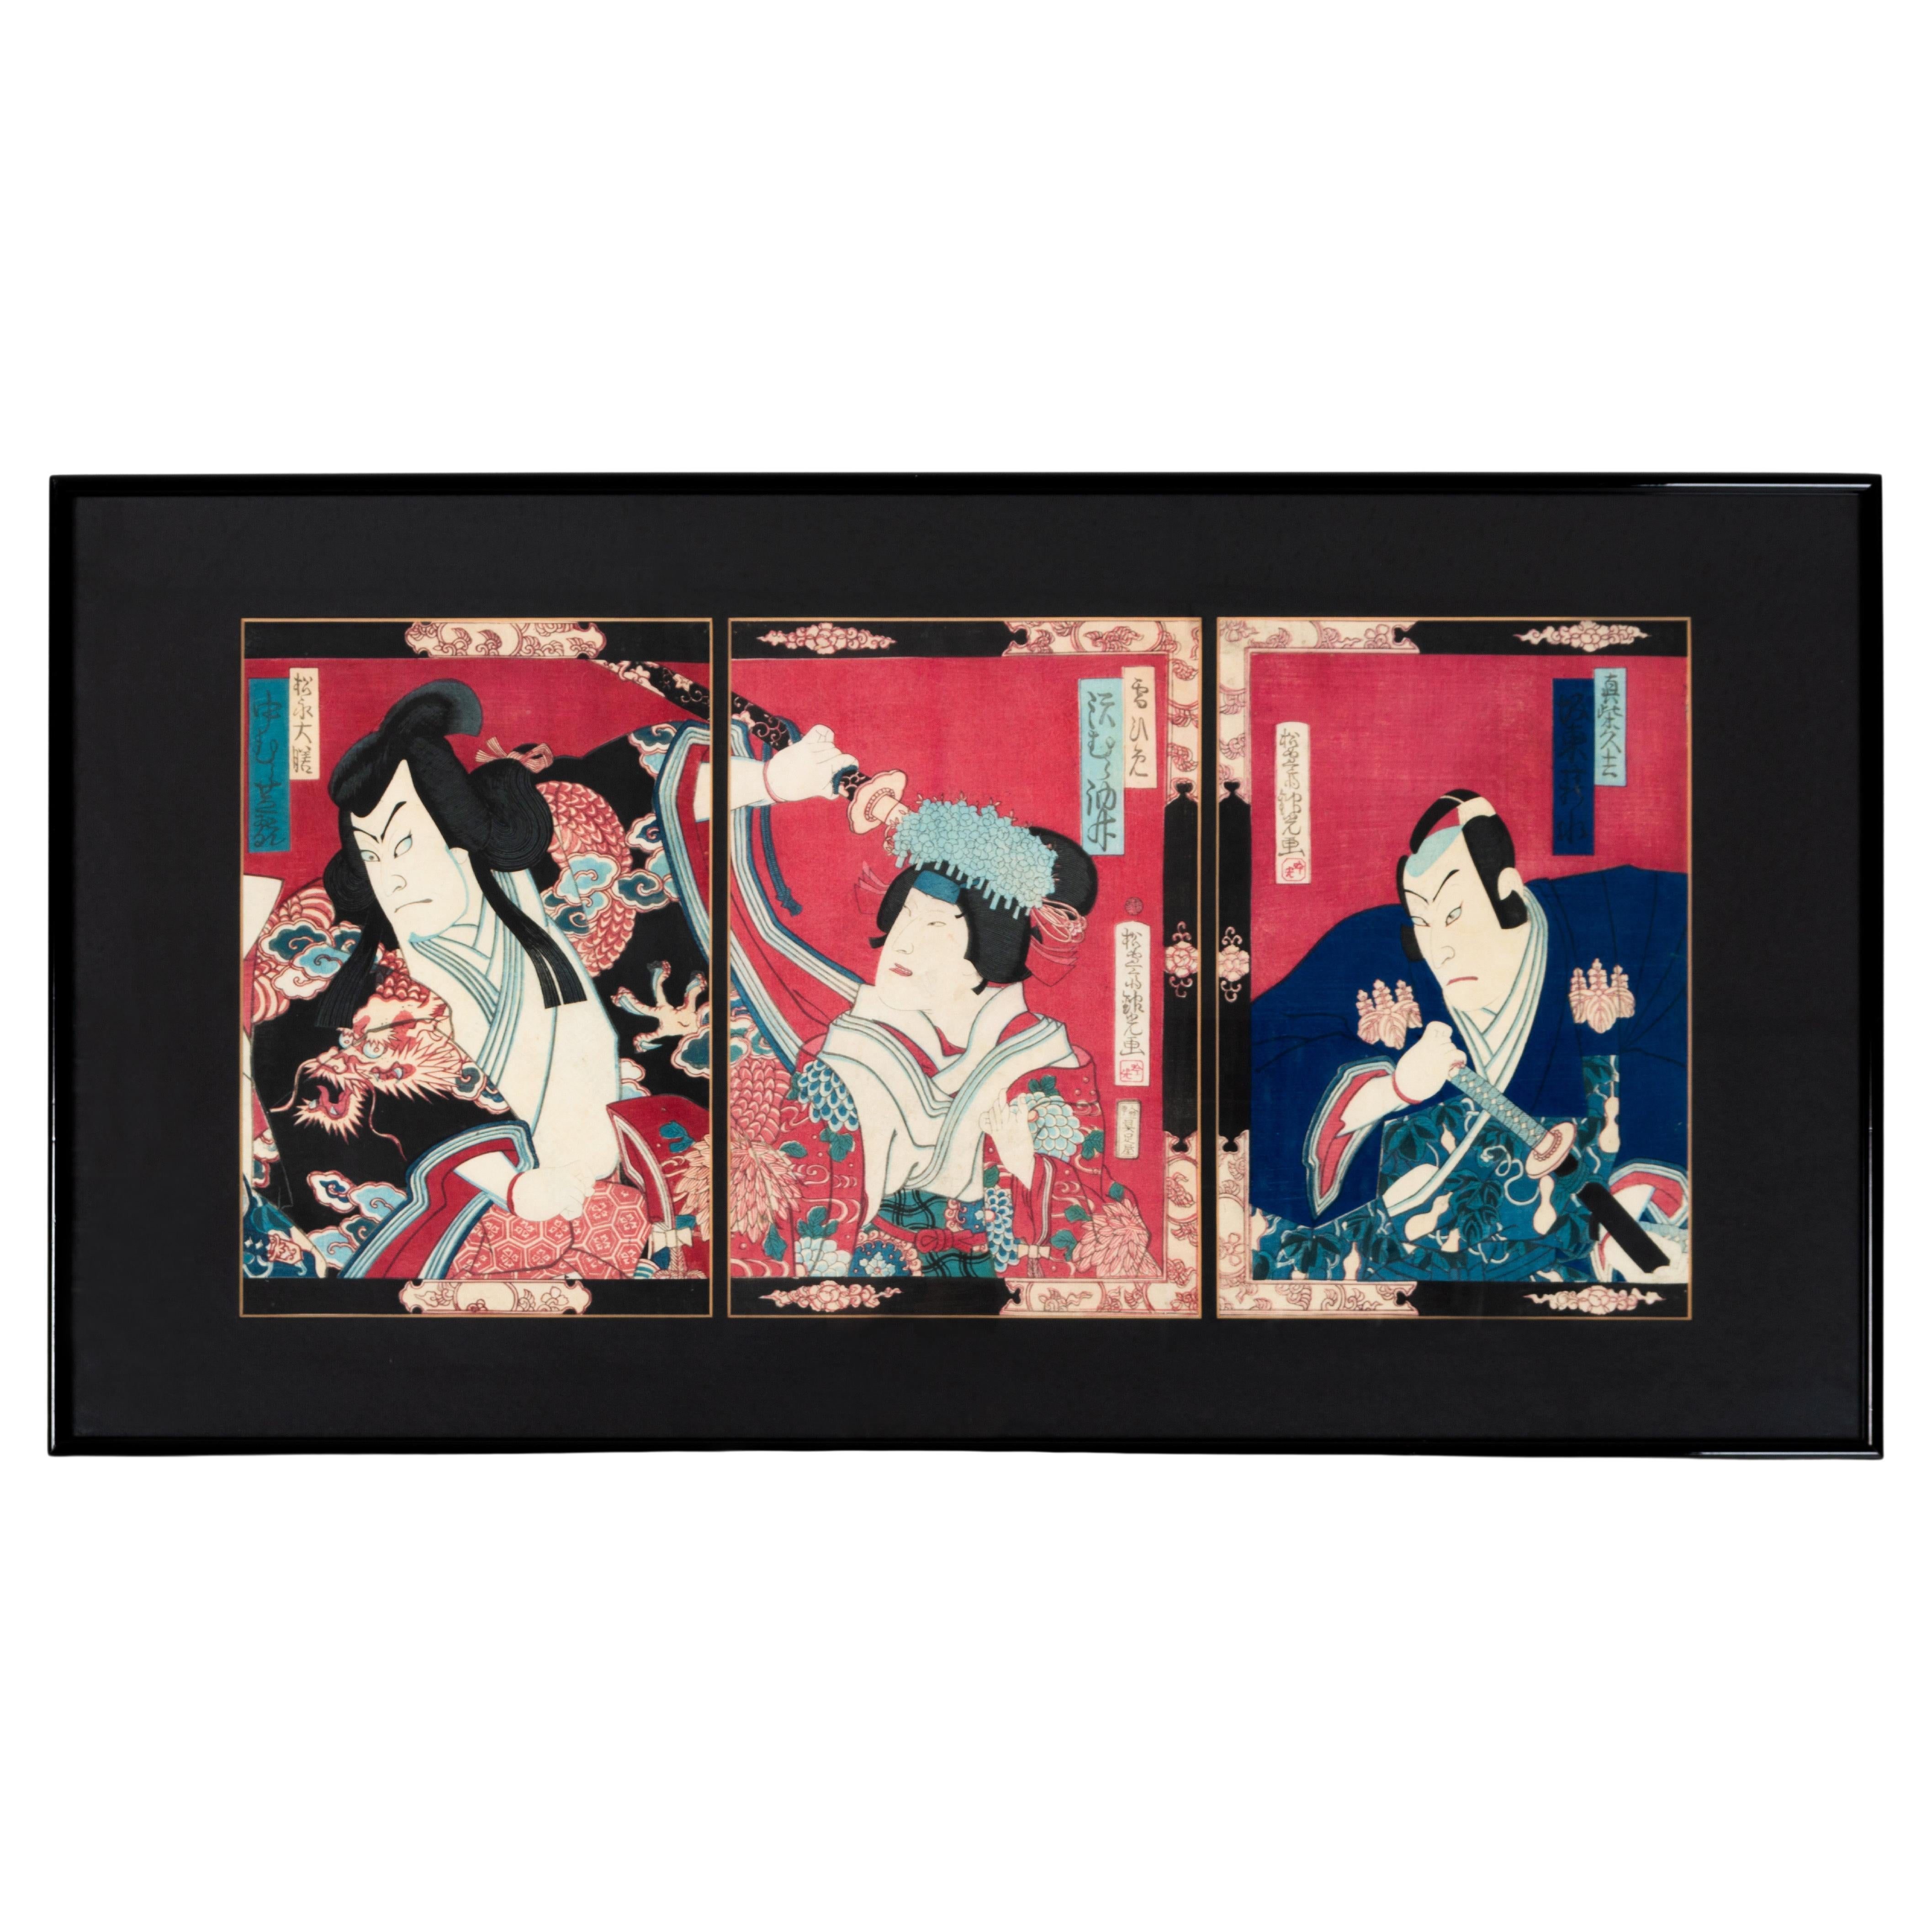 Gerahmte japanische Holzschnitt-D Triptychon-Szene einer Kabuki-Performance aus dem 19. Jahrhundert